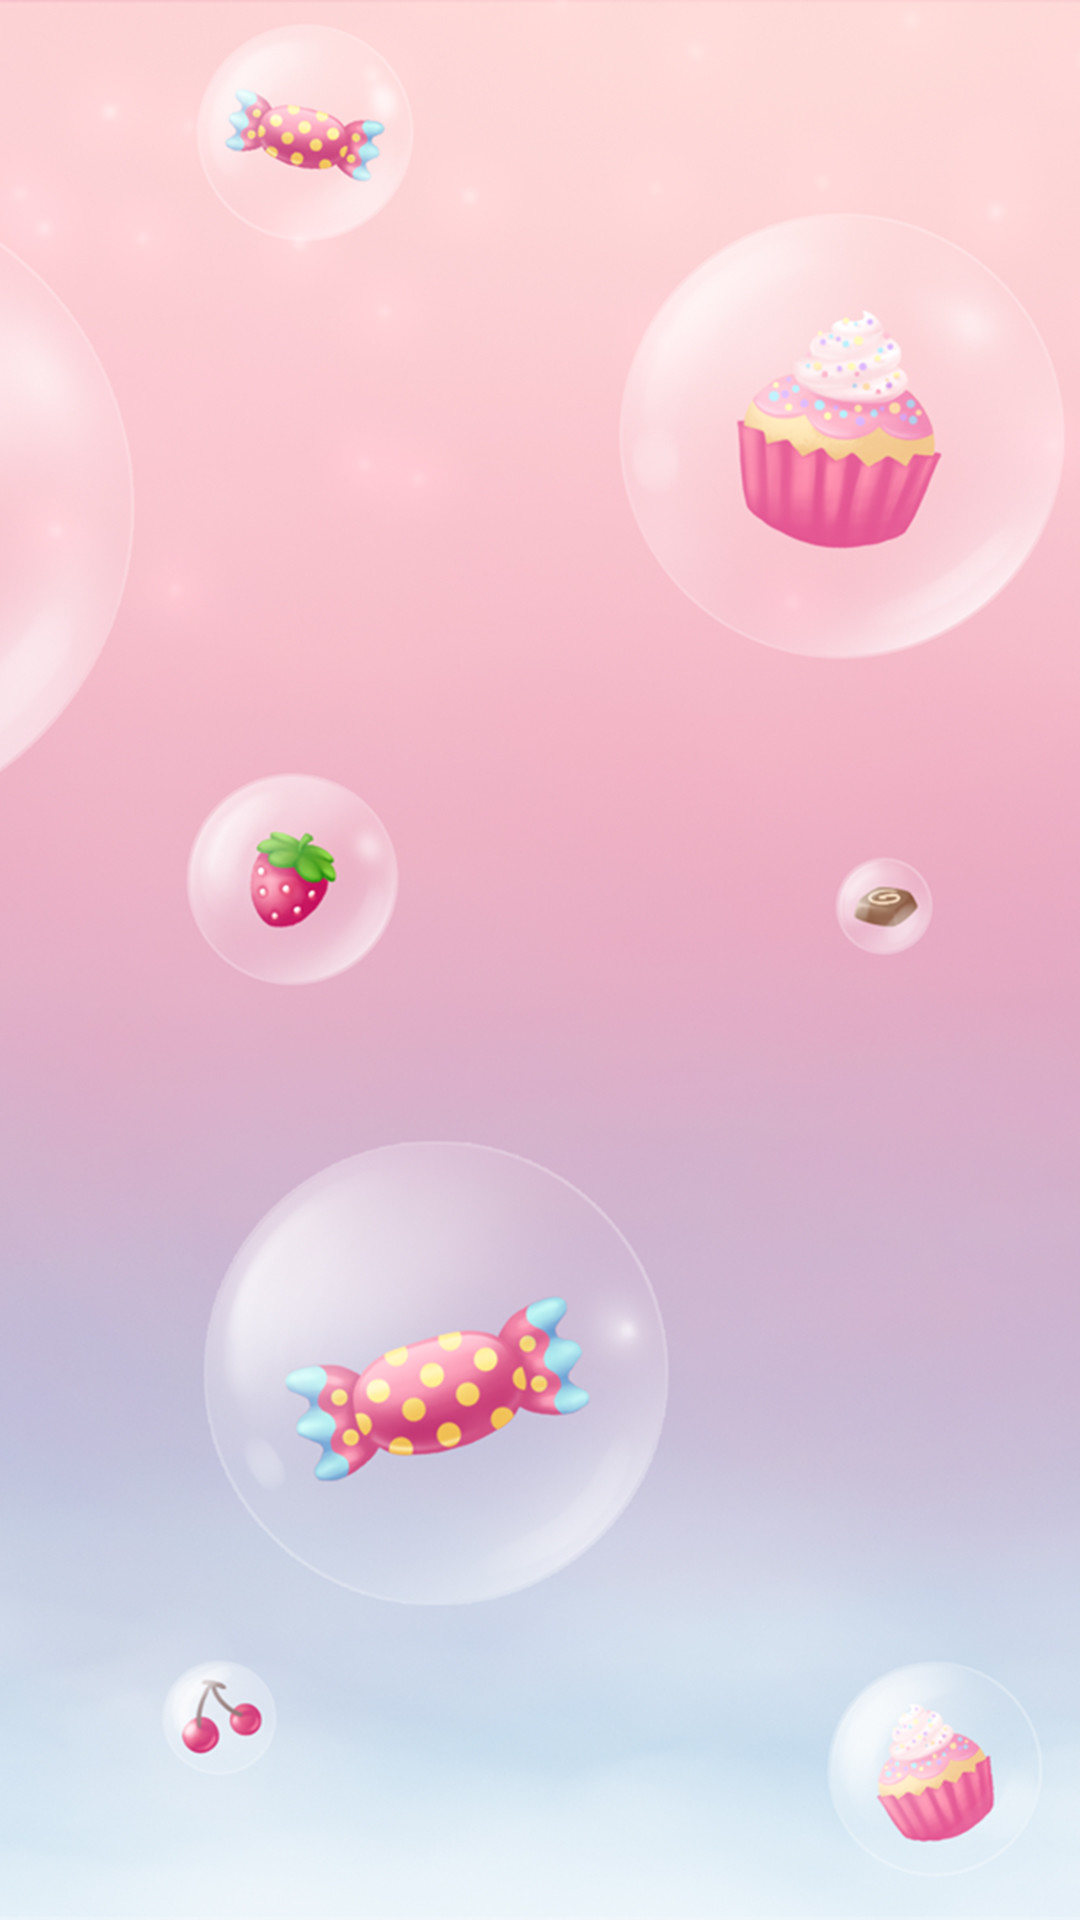 Girly cute iPhone6s wallpaper cupcakes